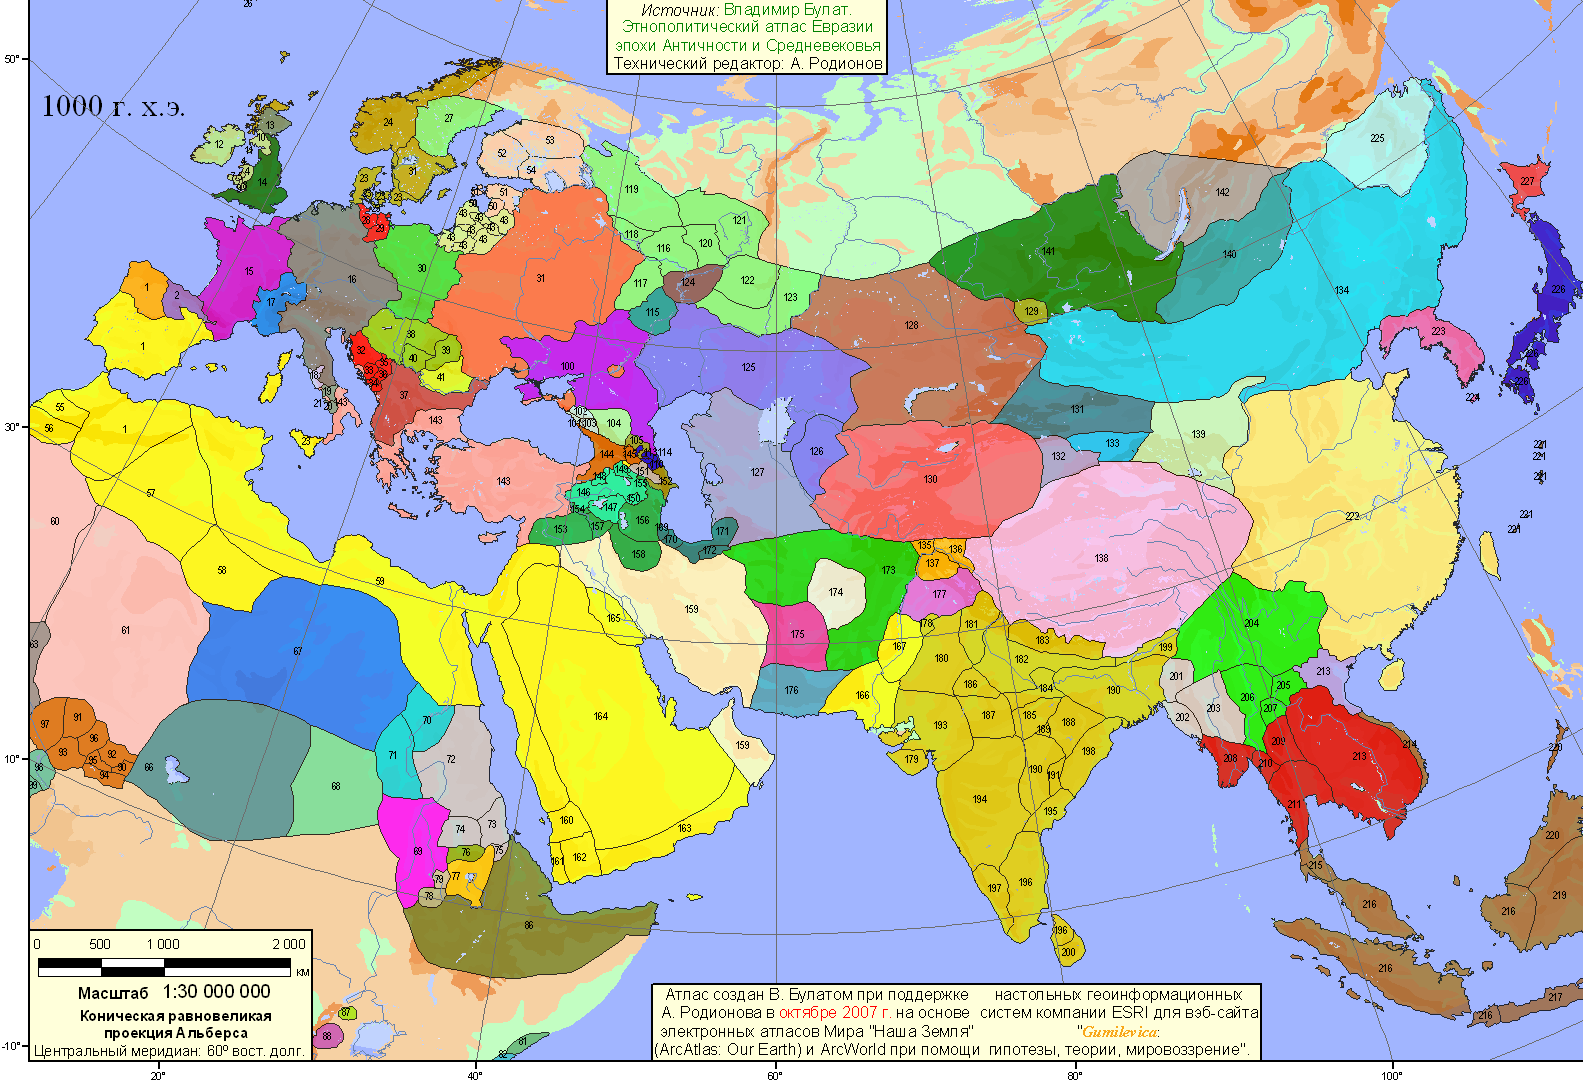 Eurasia - 1000 AD (338 Kbytes)